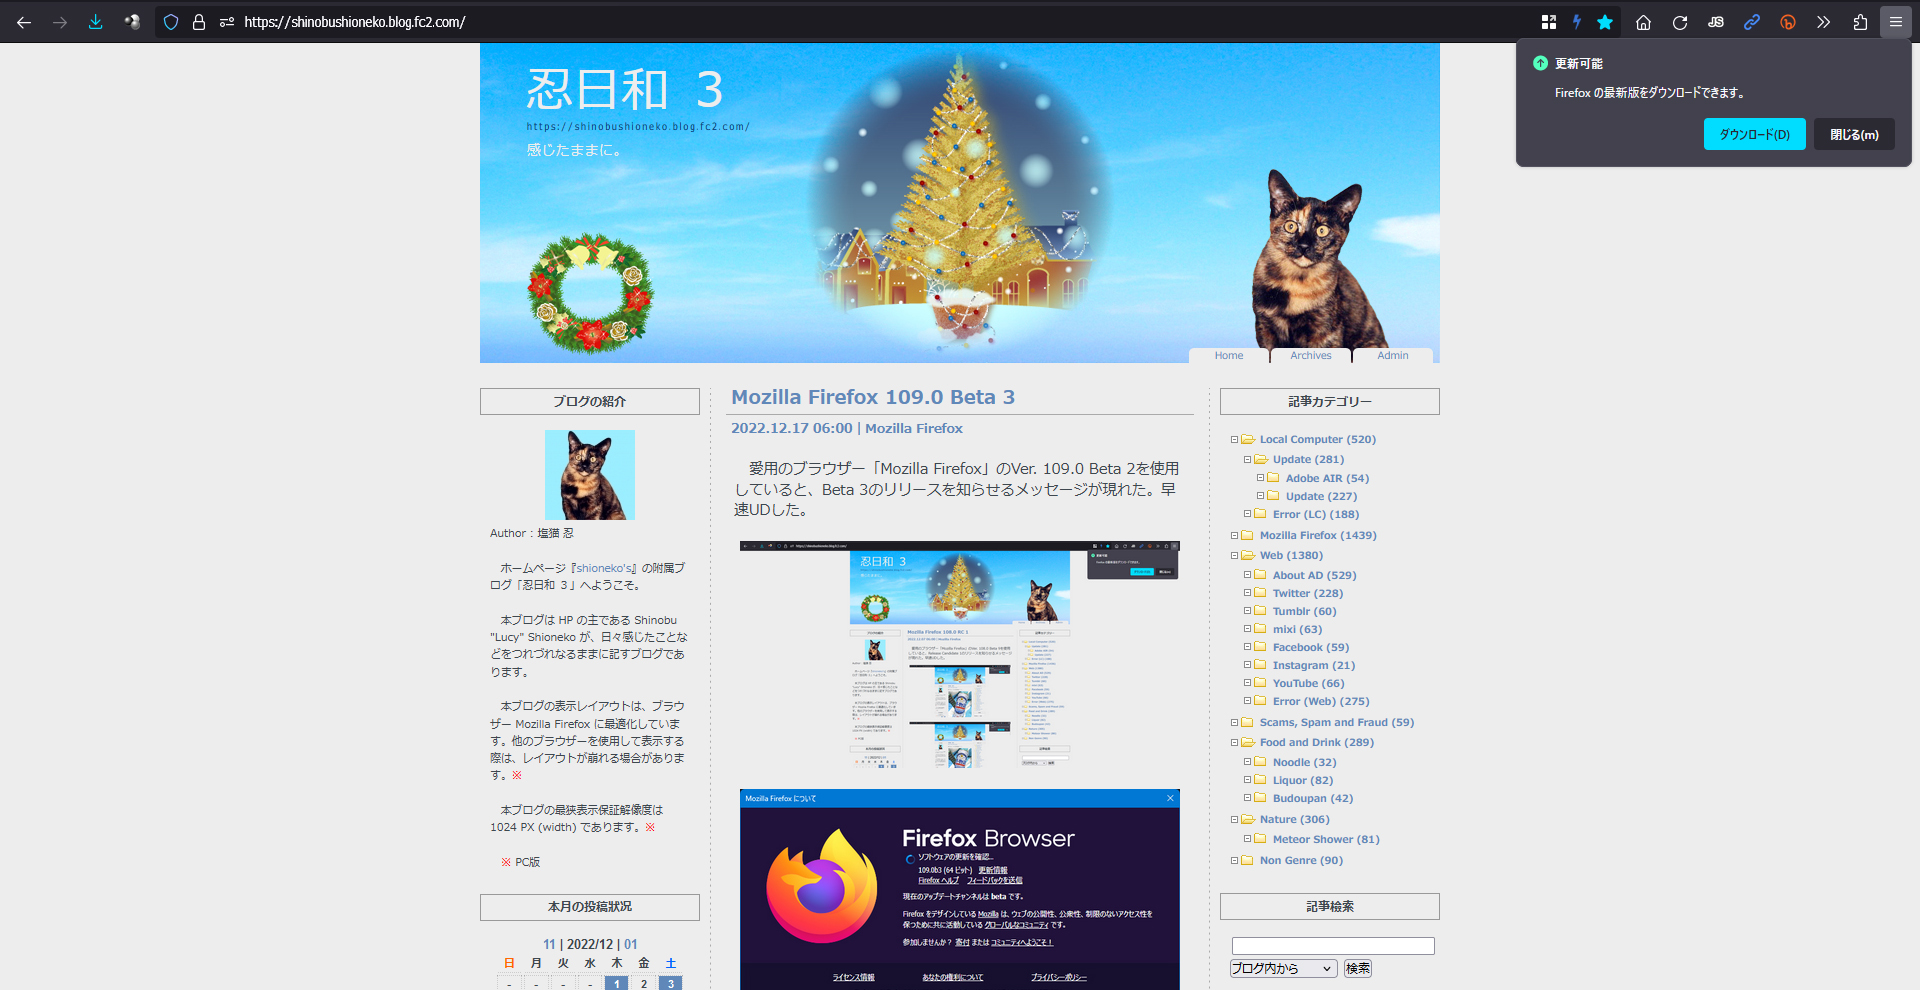 Mozilla Firefox 109.0 Beta 4